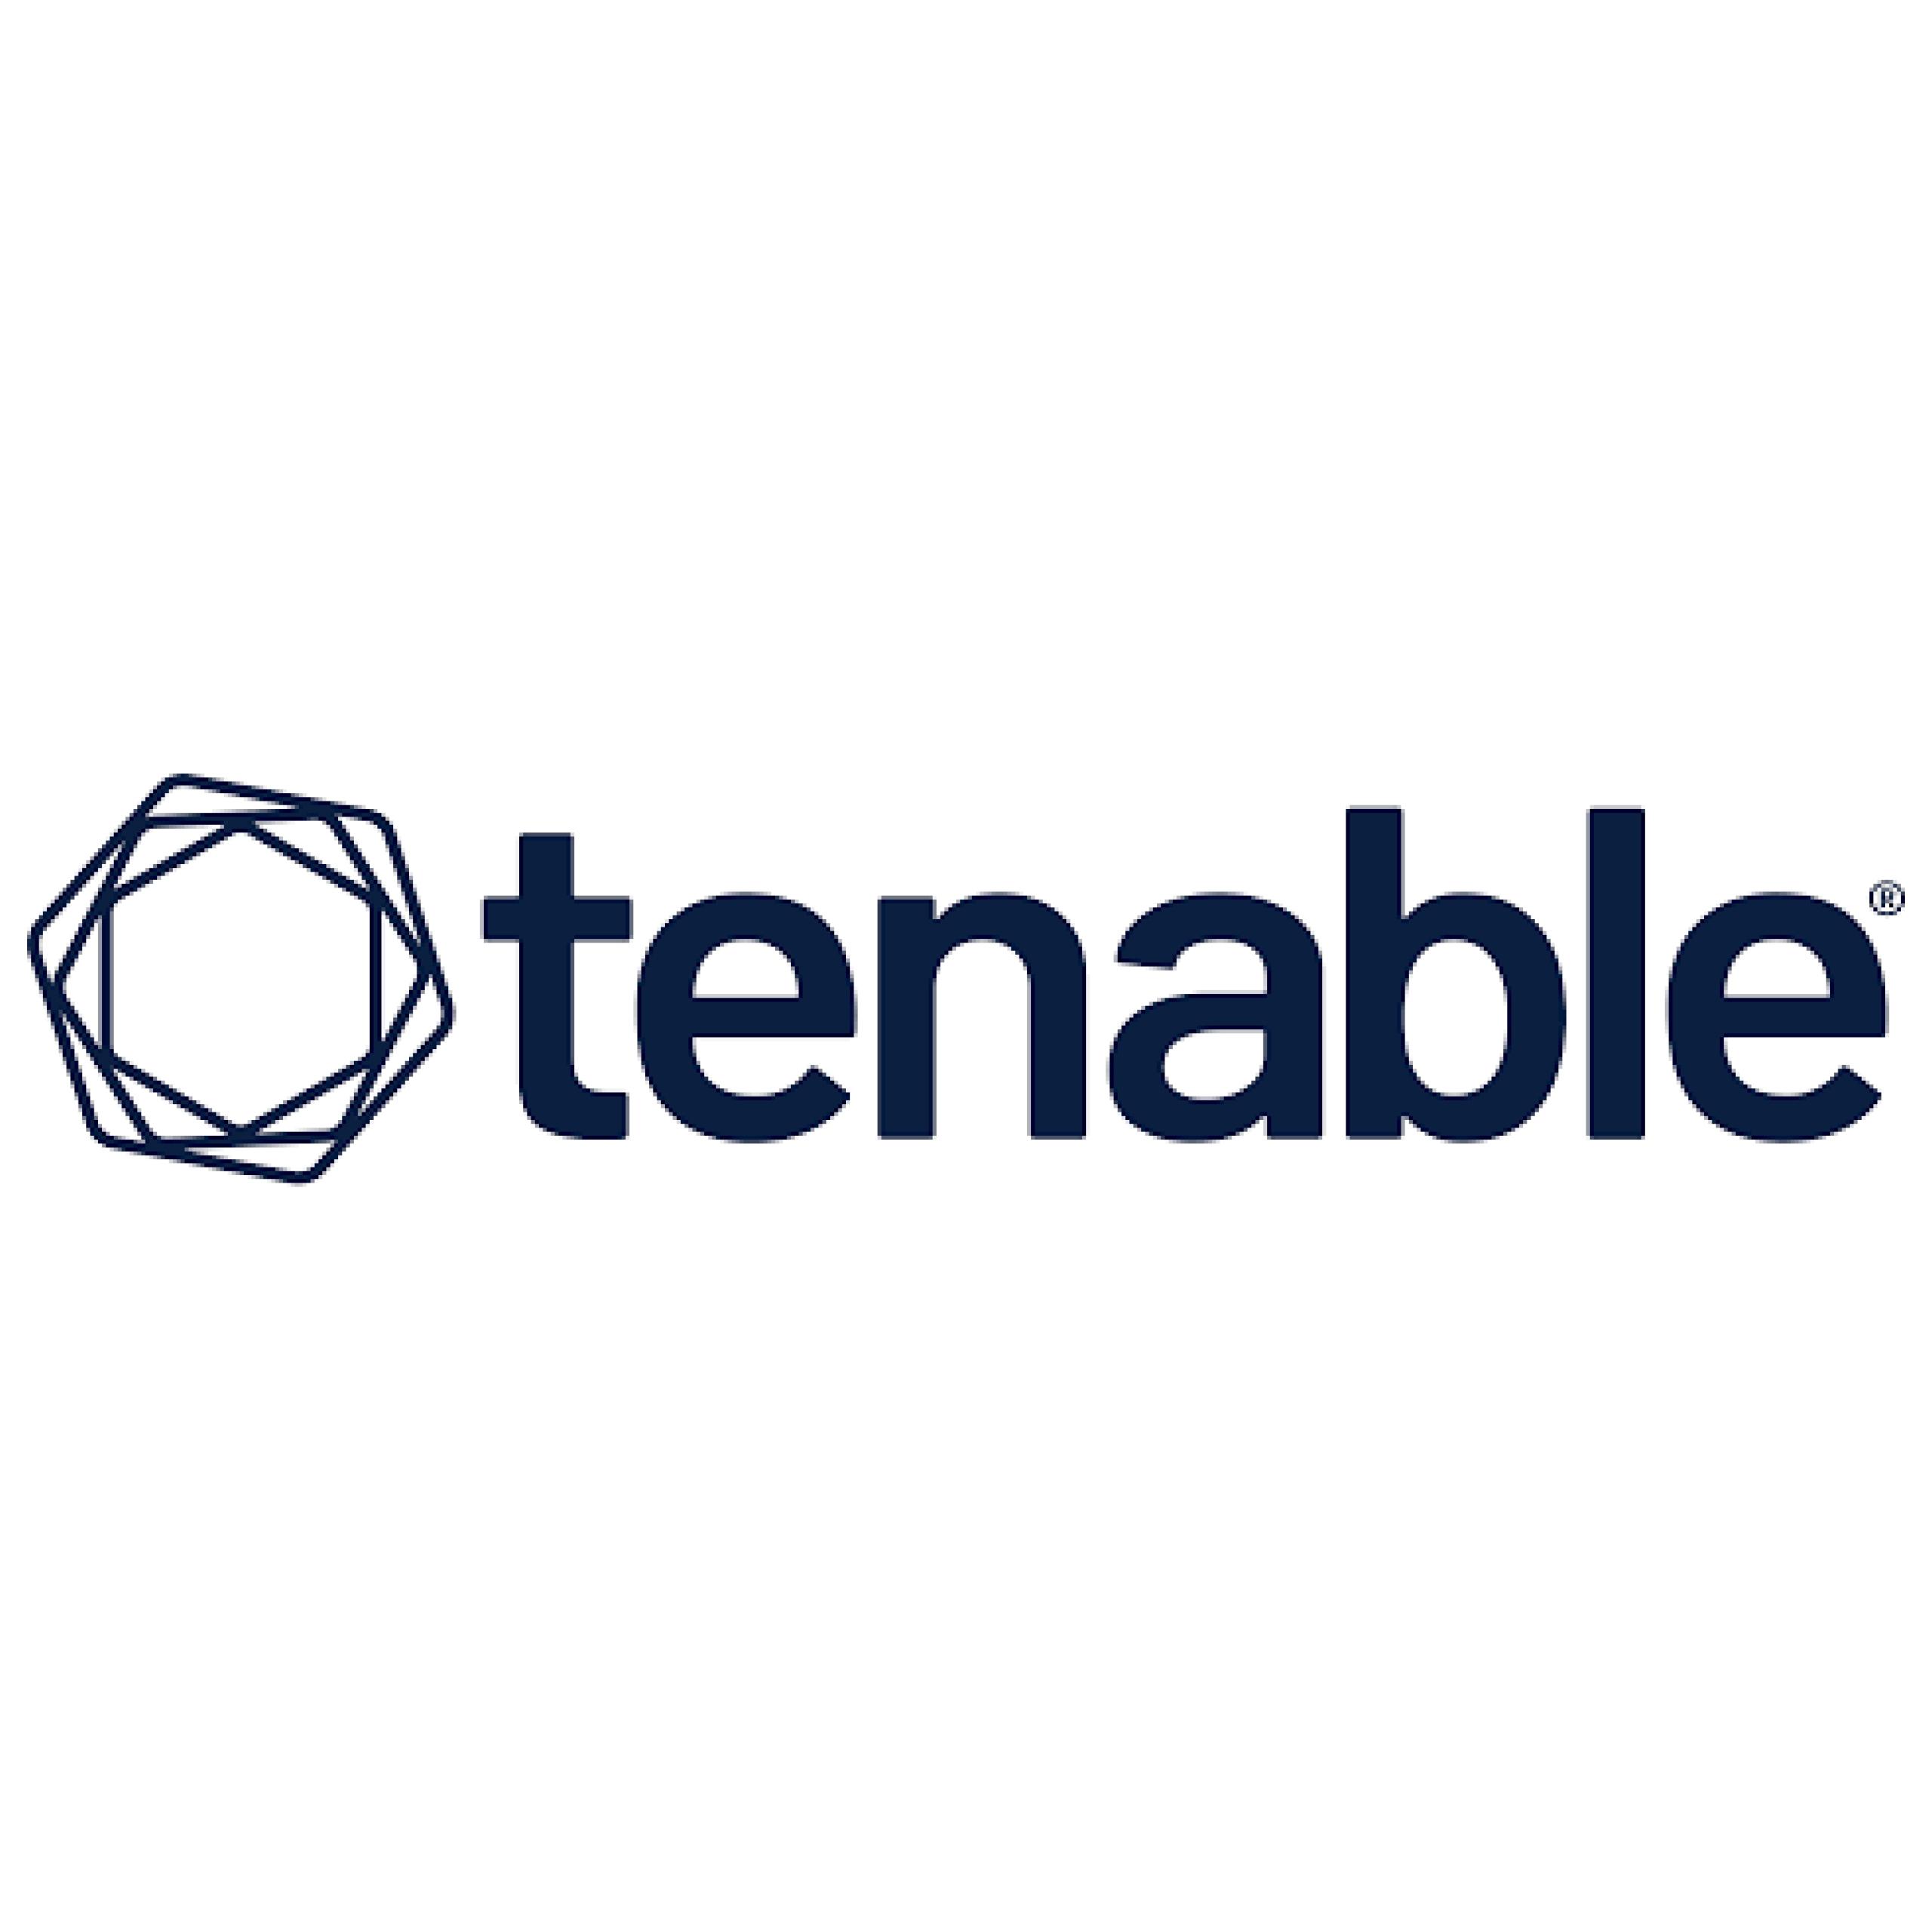 tenable site | Industrial Cybersec Forum,